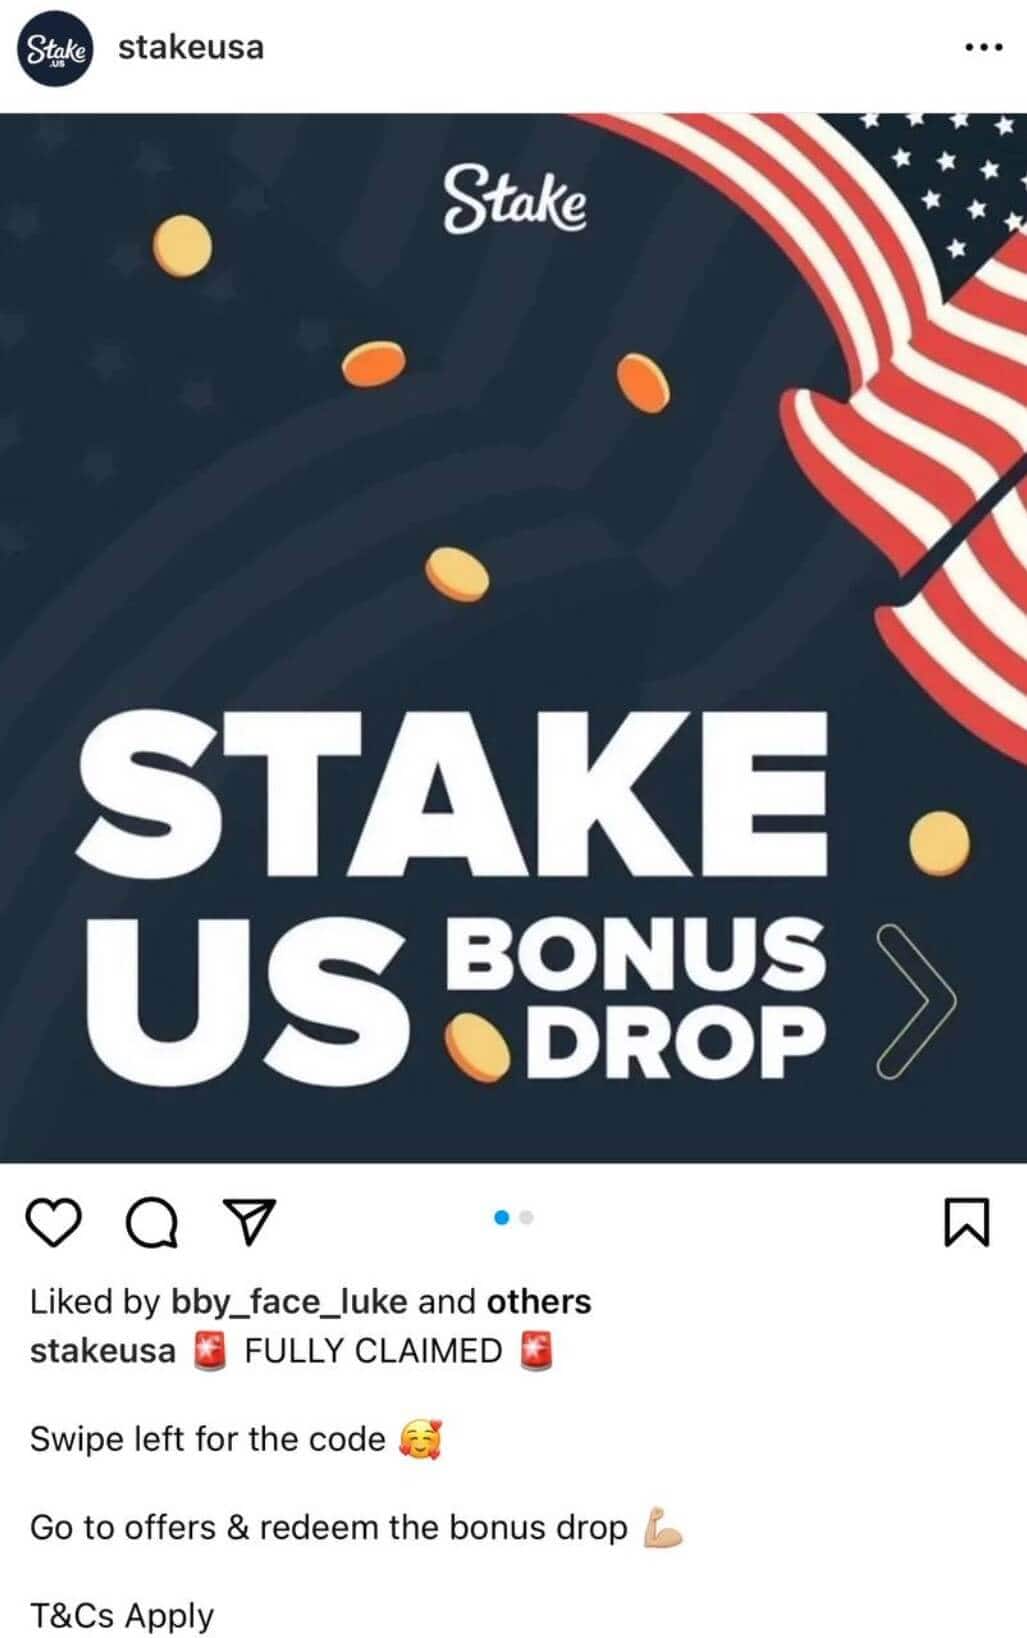 Stake.us Bonus Drop